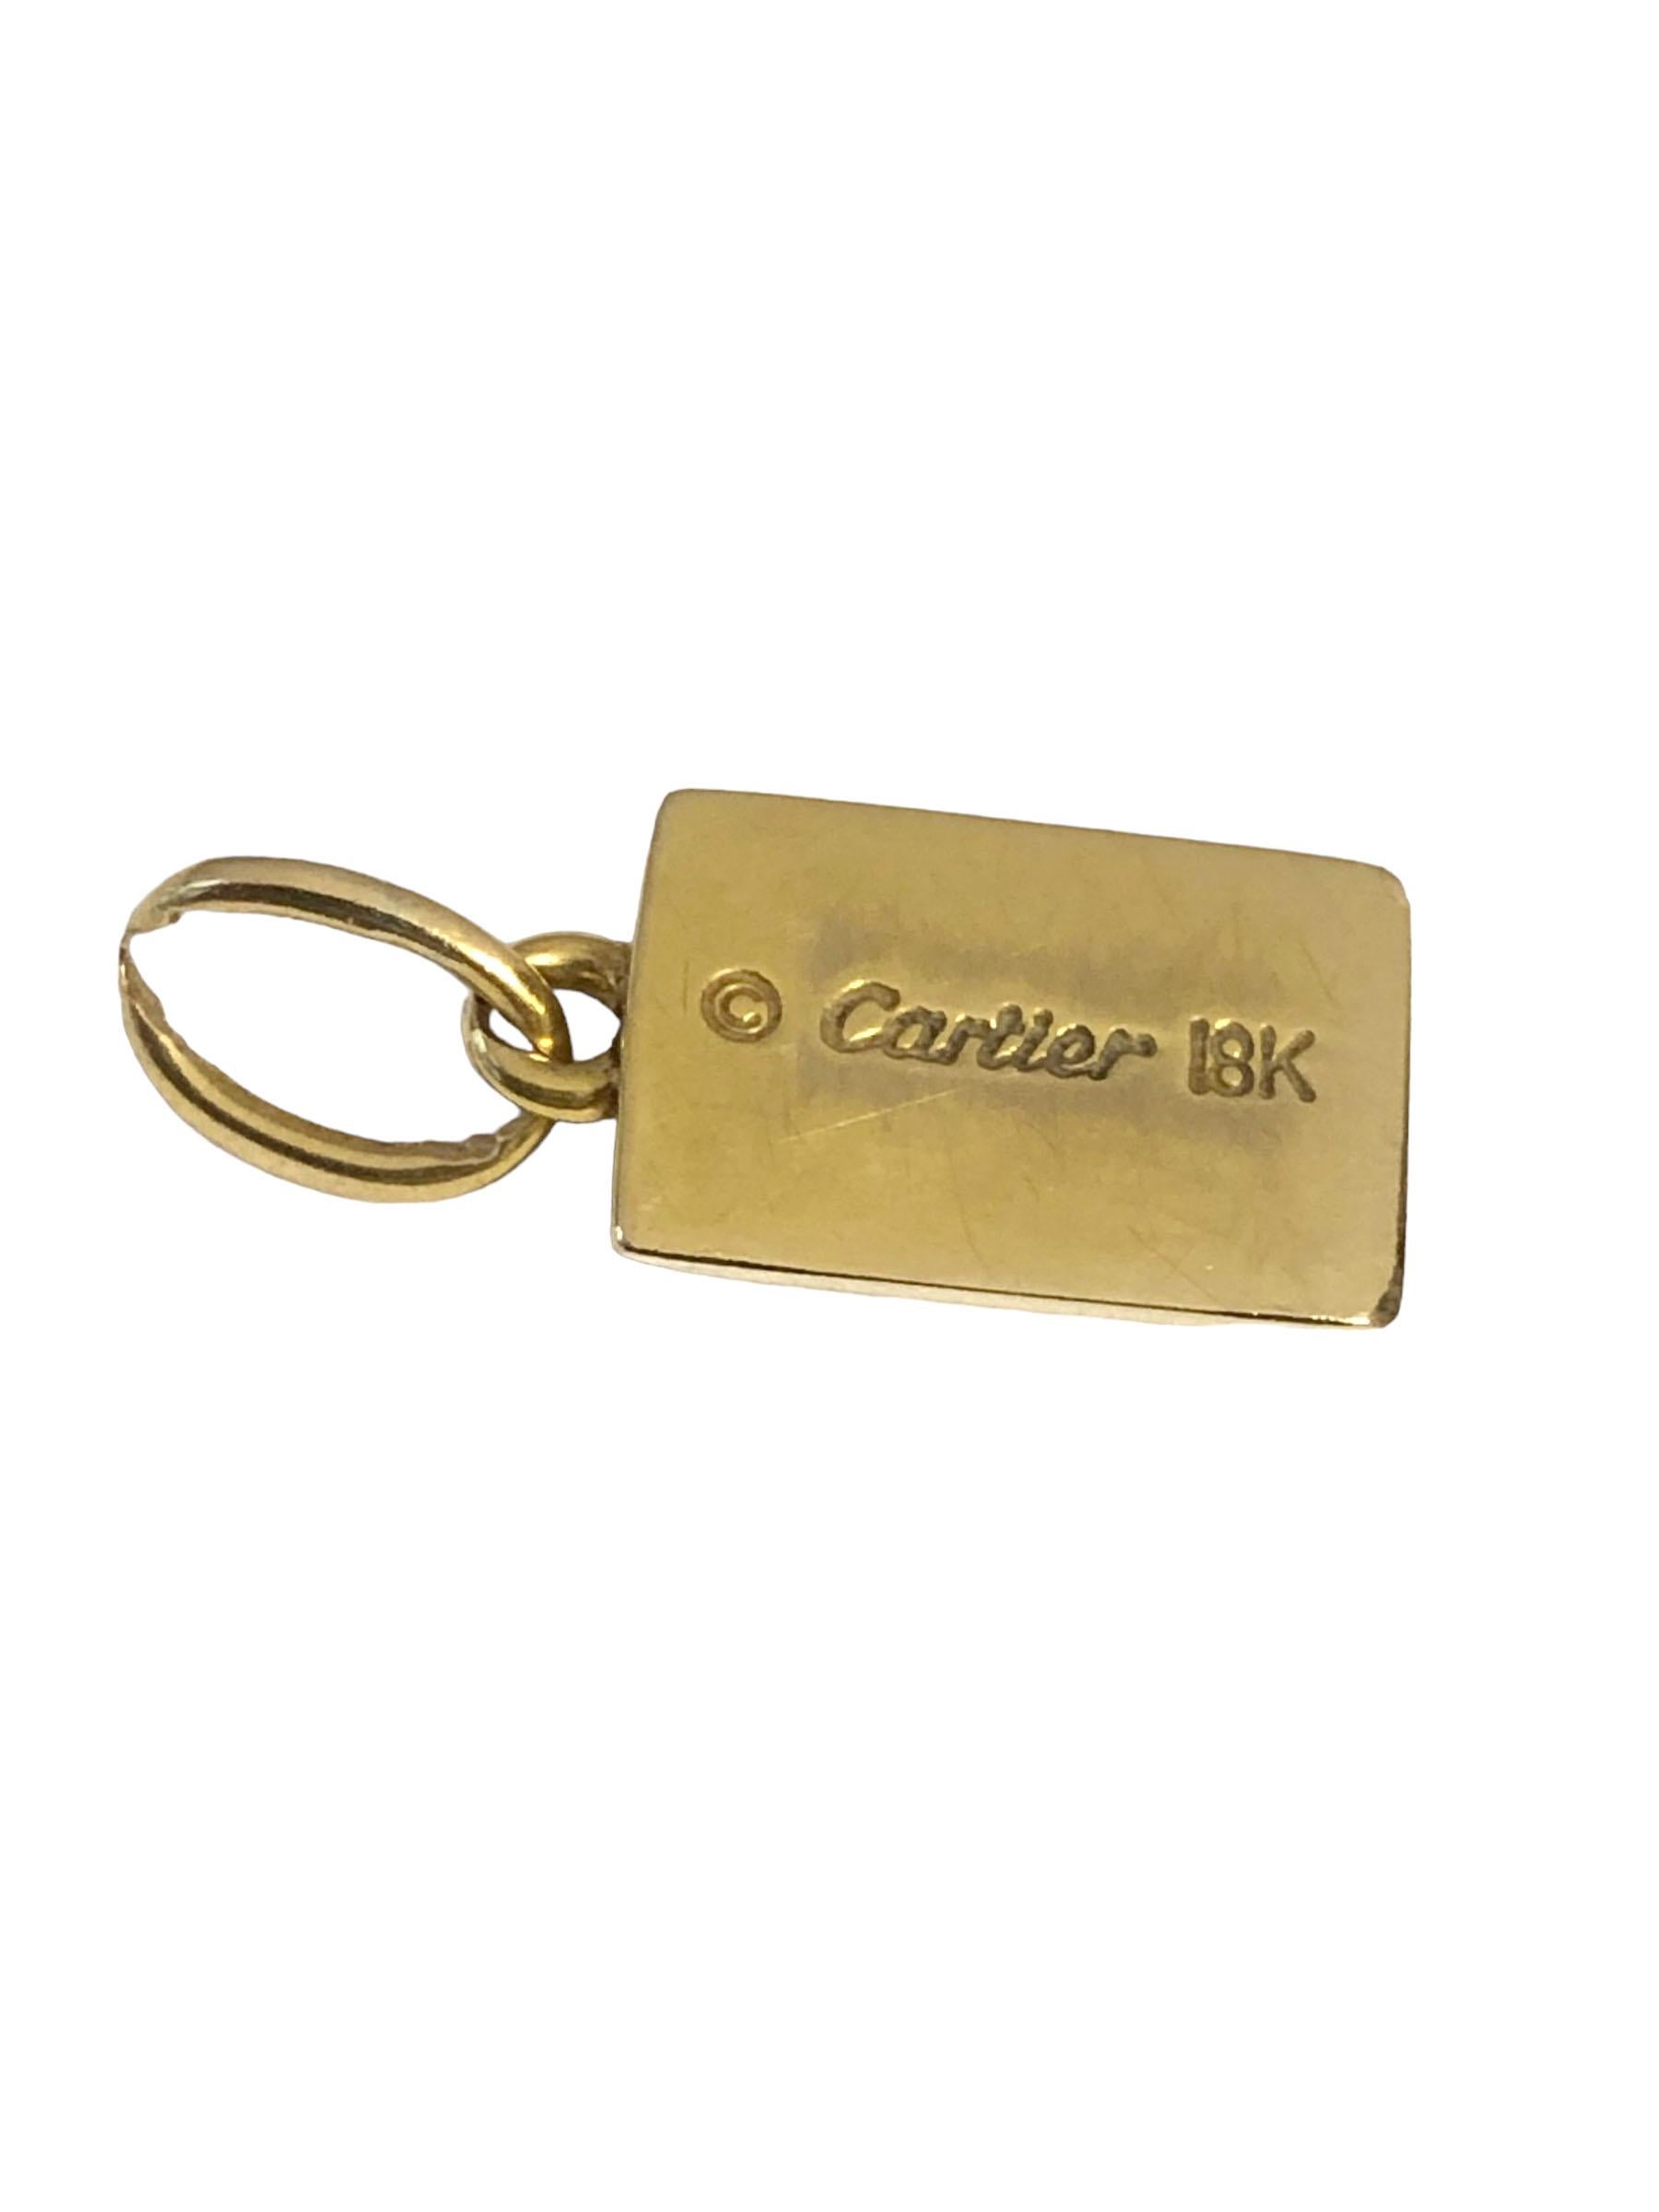 Circa 1980 Cartier 1/8 Ounce 18k Yellow Gold Ingot charm, measuring 1/2 X 3/8 inch. Comes in the original Cartier presentation box.